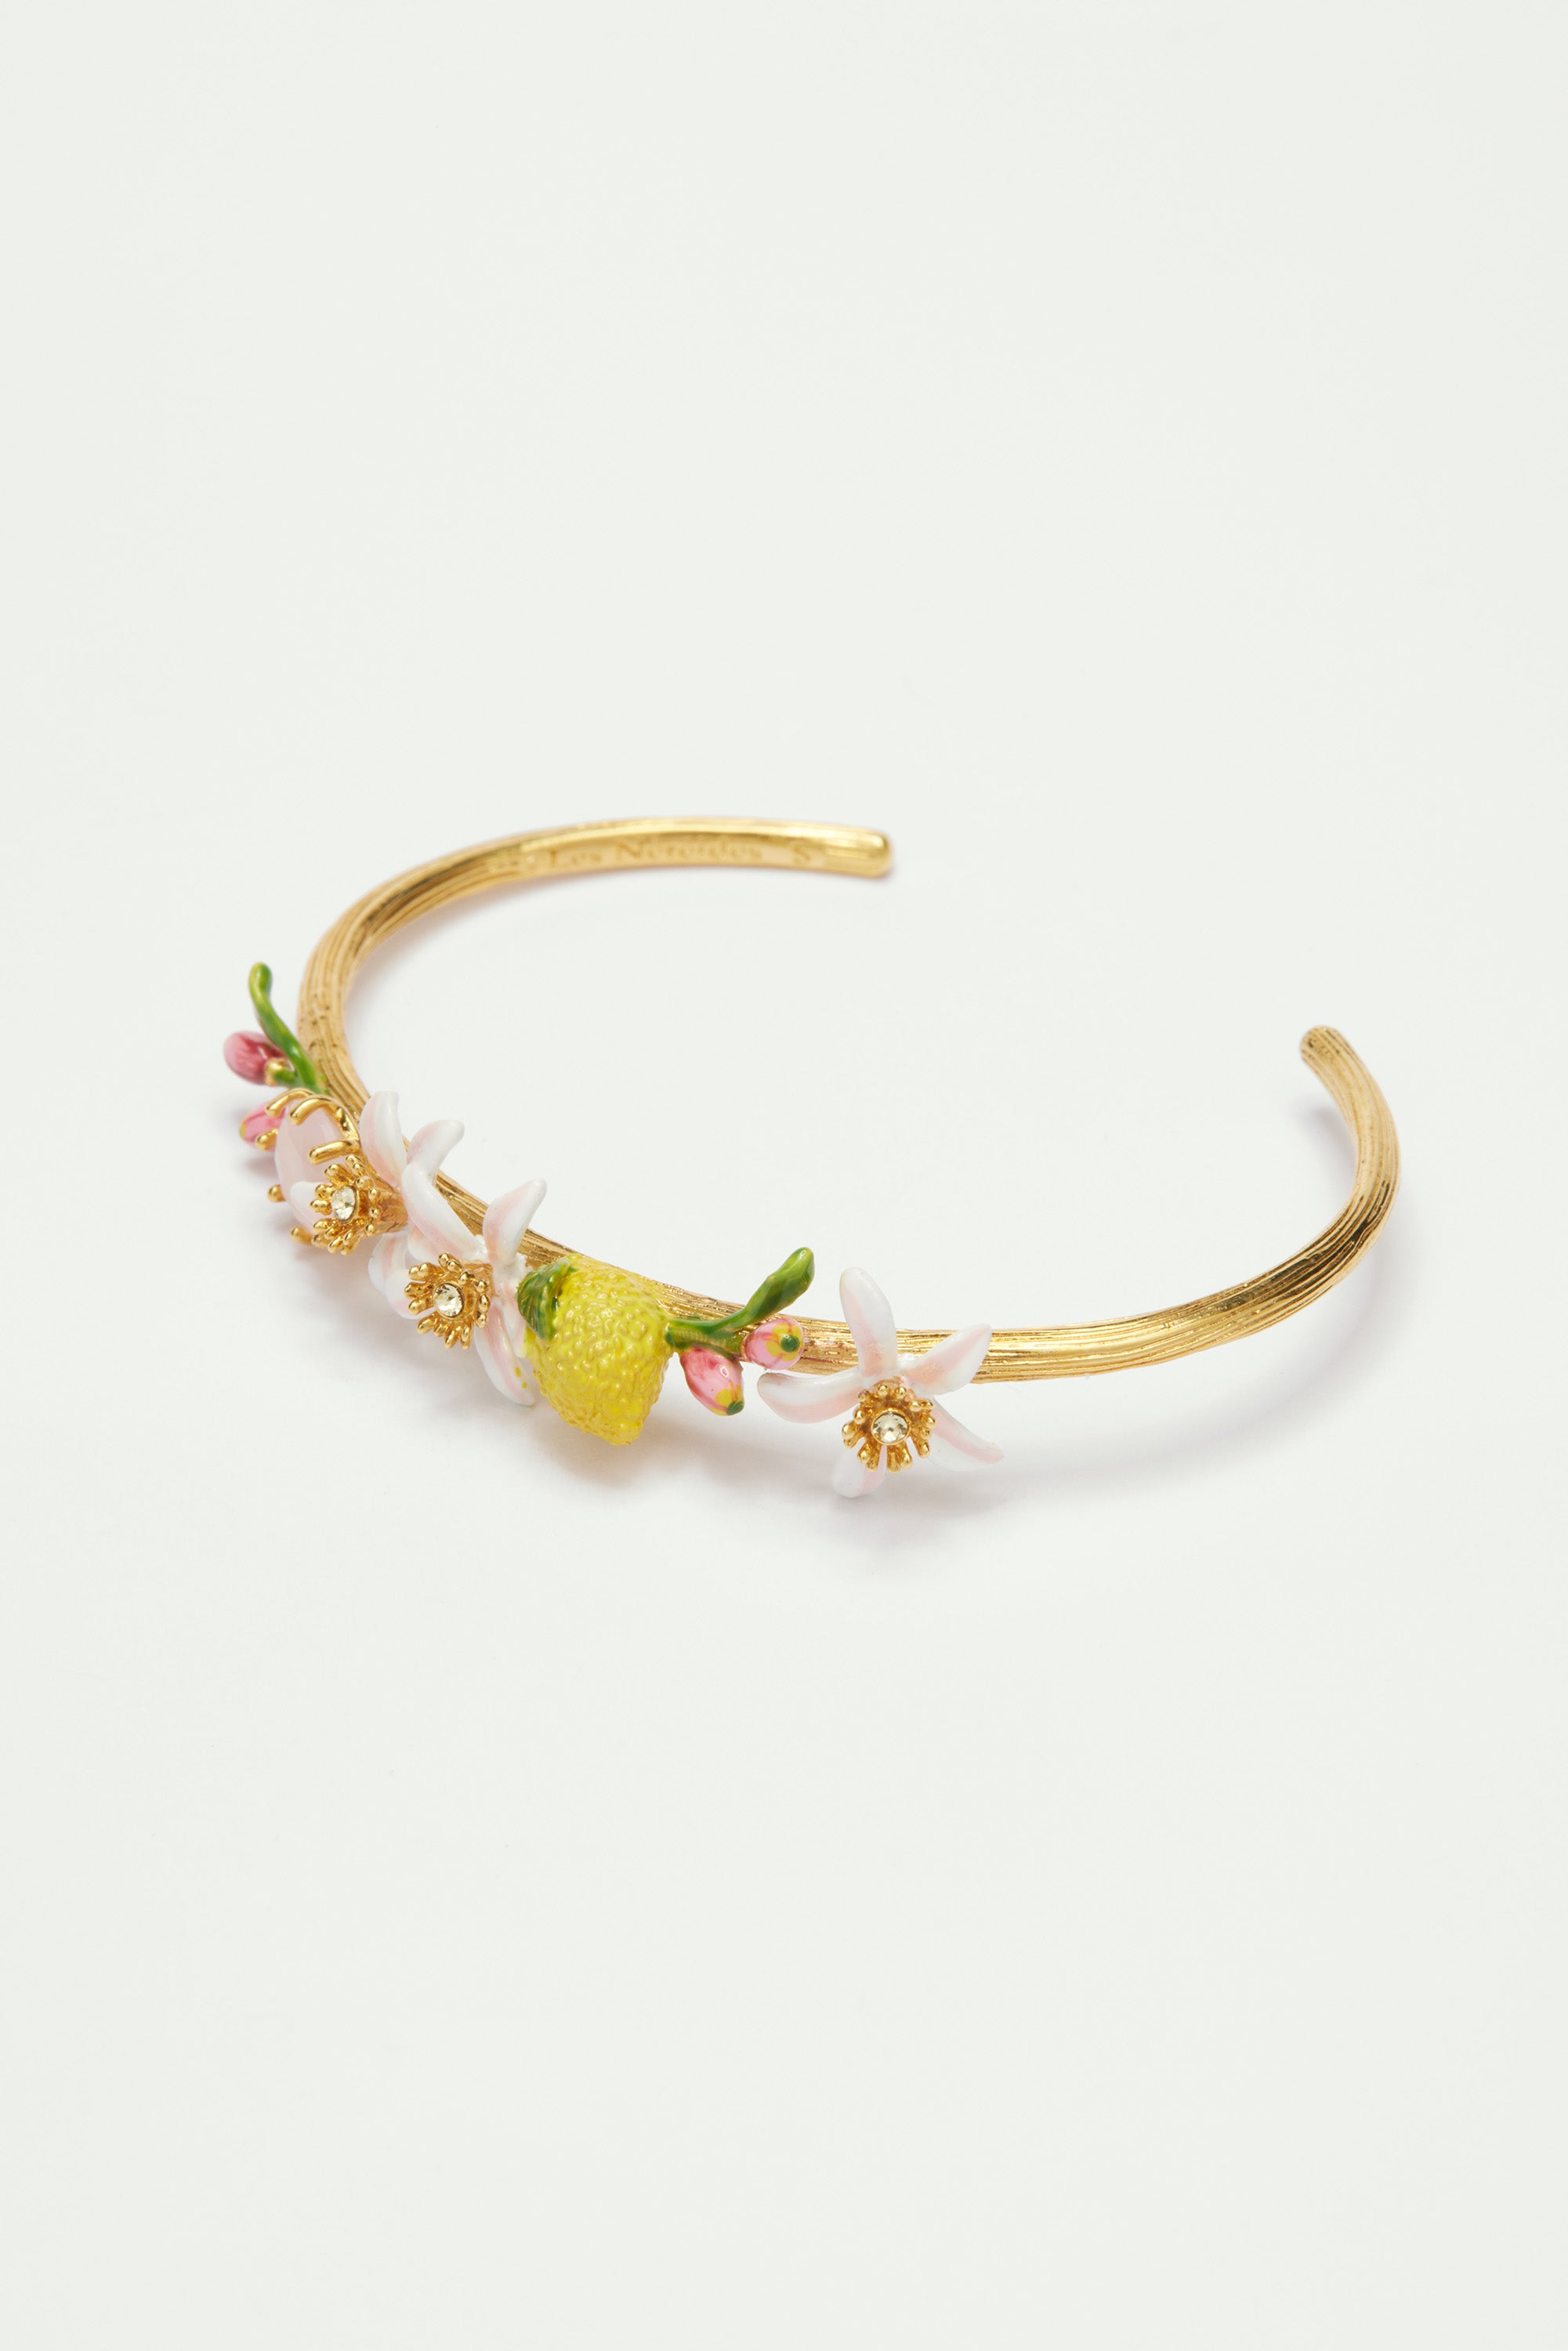 Lemon, lemon blossom and pink glass stone bangle bracelet